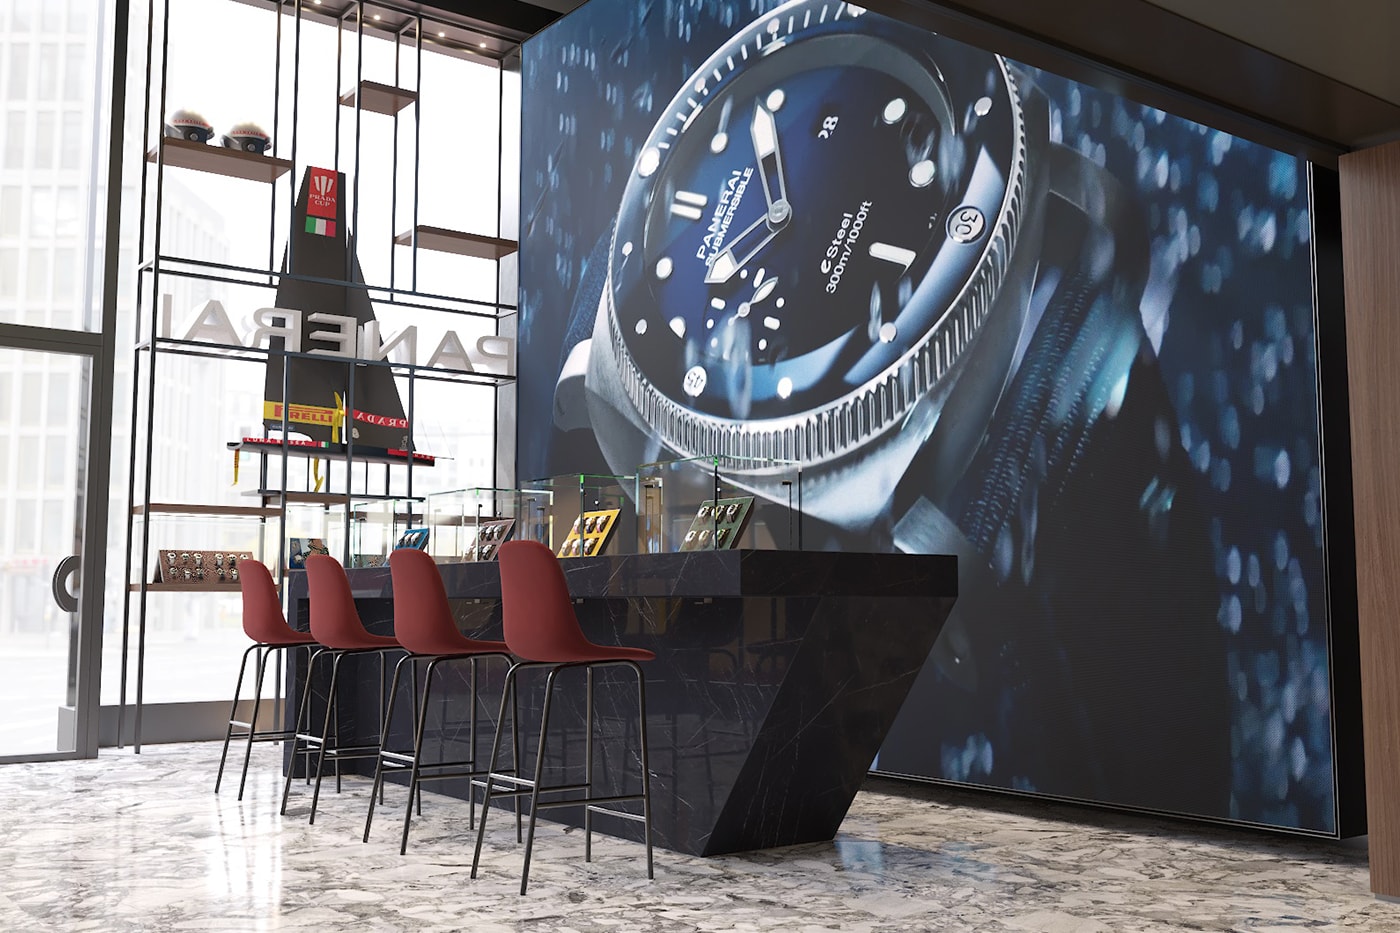 Paneari 推出兩款腕錶新作慶祝紐約全新門店開業